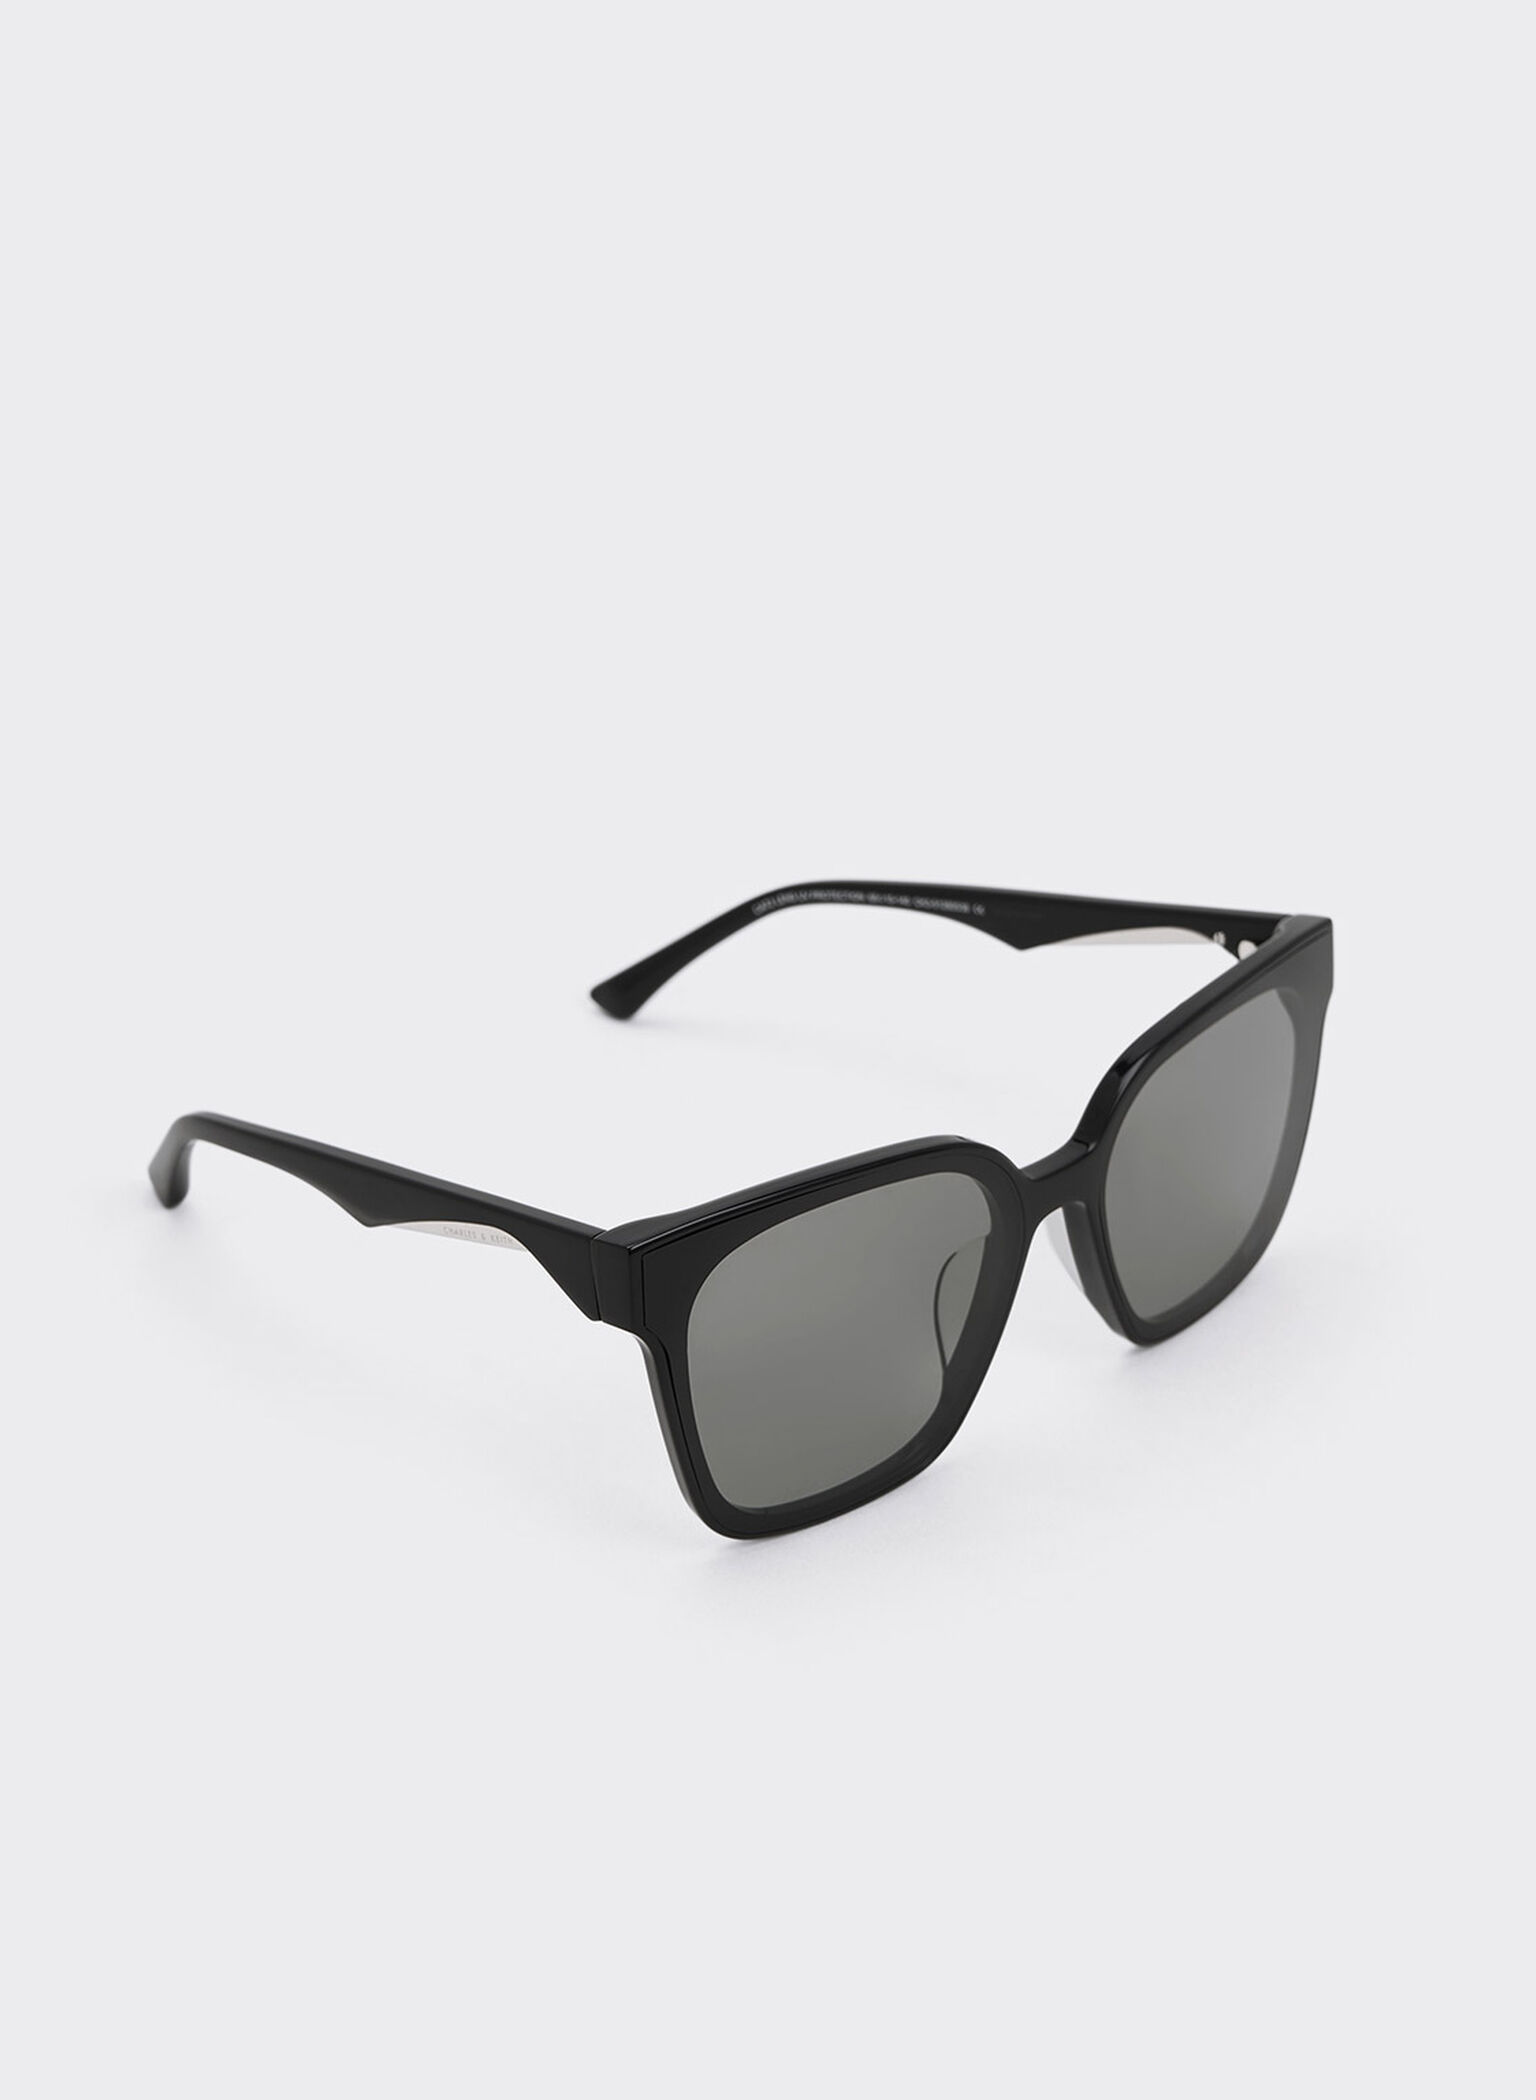 Square Thick-Frame Sunglasses, Black, hi-res